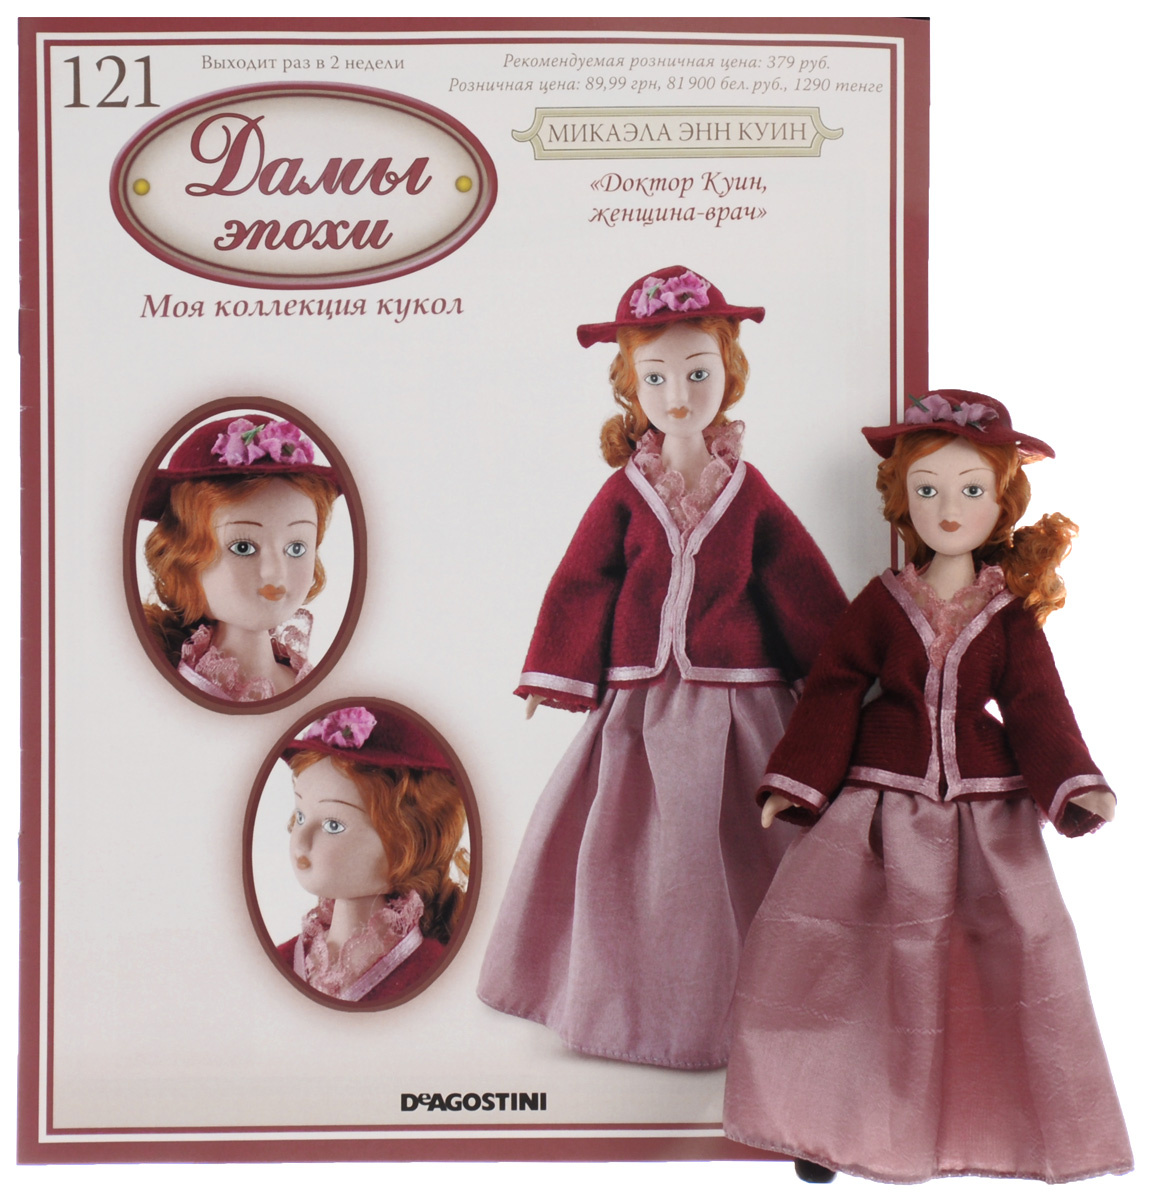 Коллекционная кукла дамы эпохи